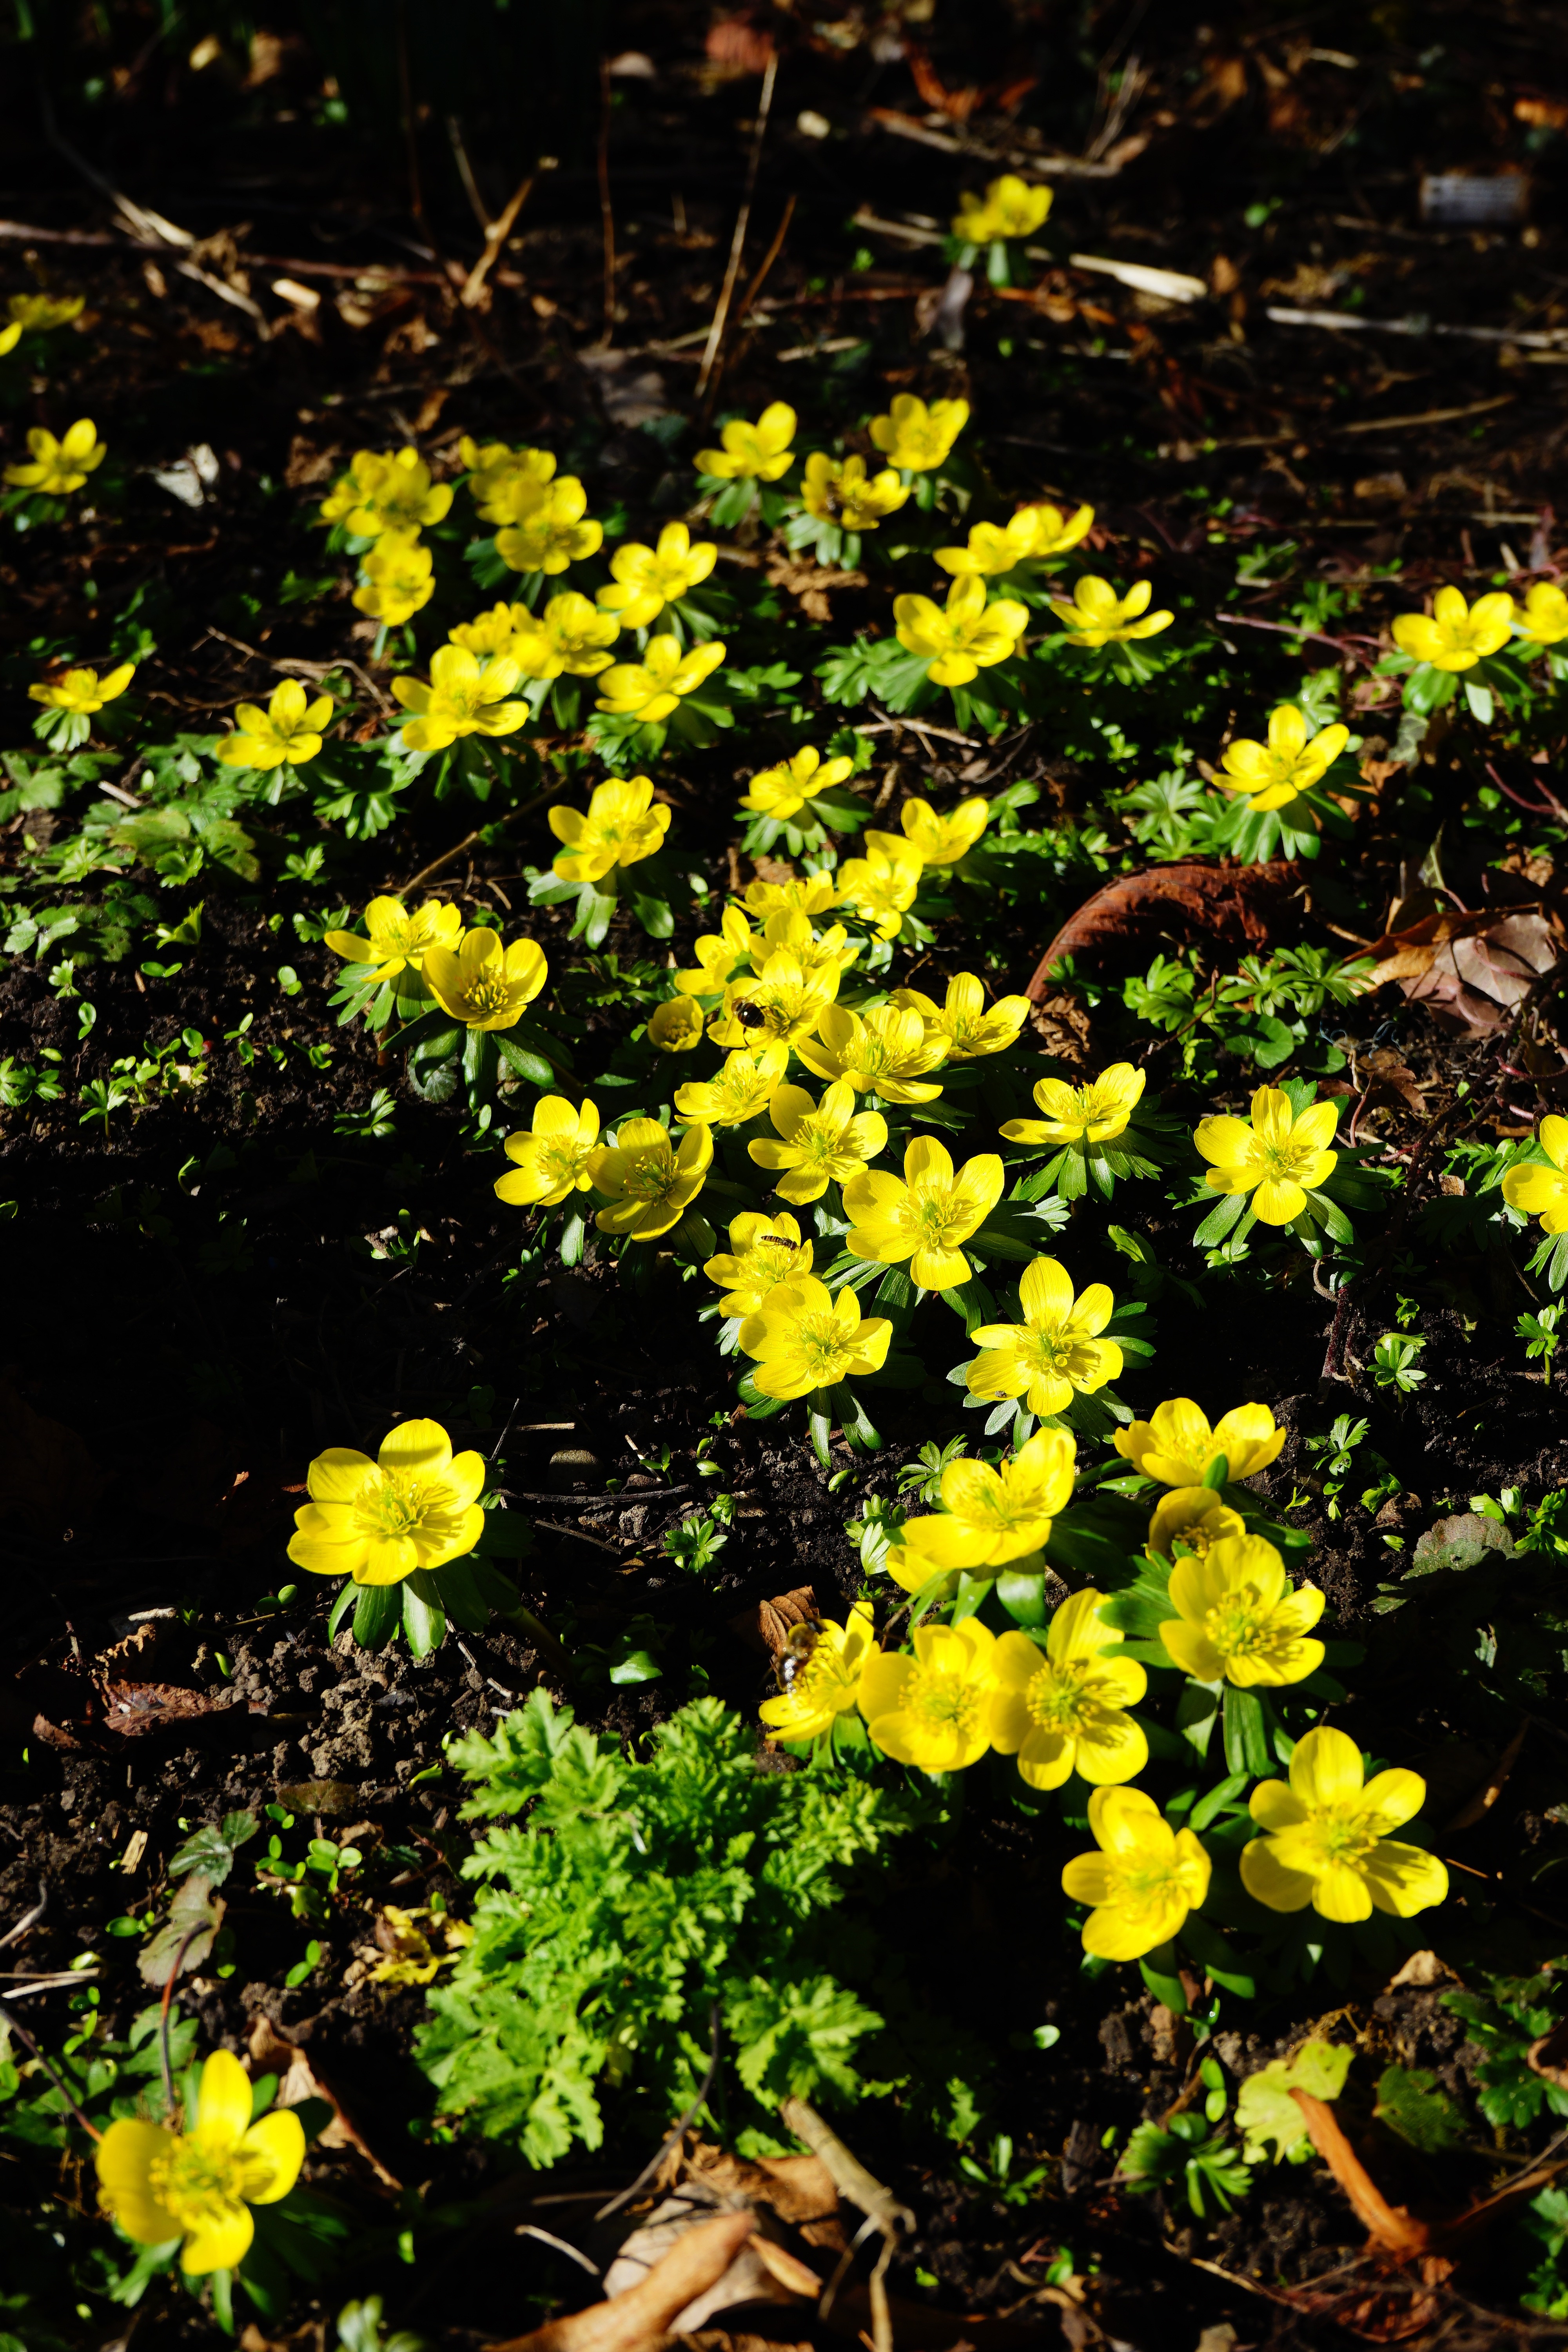 yellow and green petaled flower garden